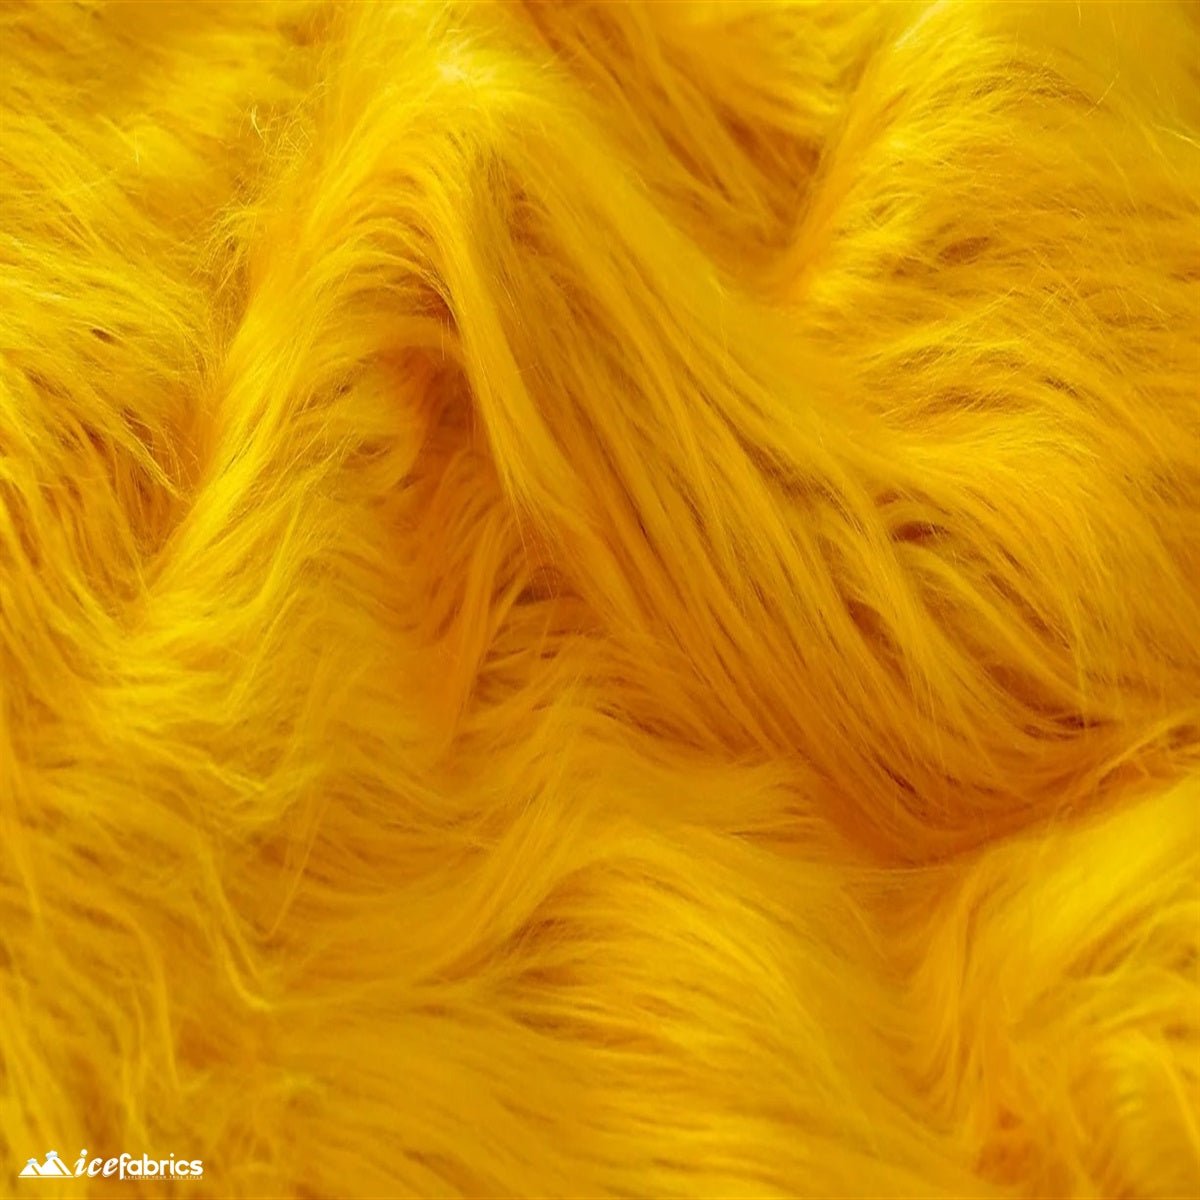 Shaggy Mohair Faux Fur Fabric/ 4 Inches Long PileICE FABRICSICE FABRICSGold1/2 Yard (60 inches Wide)Shaggy Mohair Faux Fur Fabric/ 4 Inches Long Pile ICE FABRICS